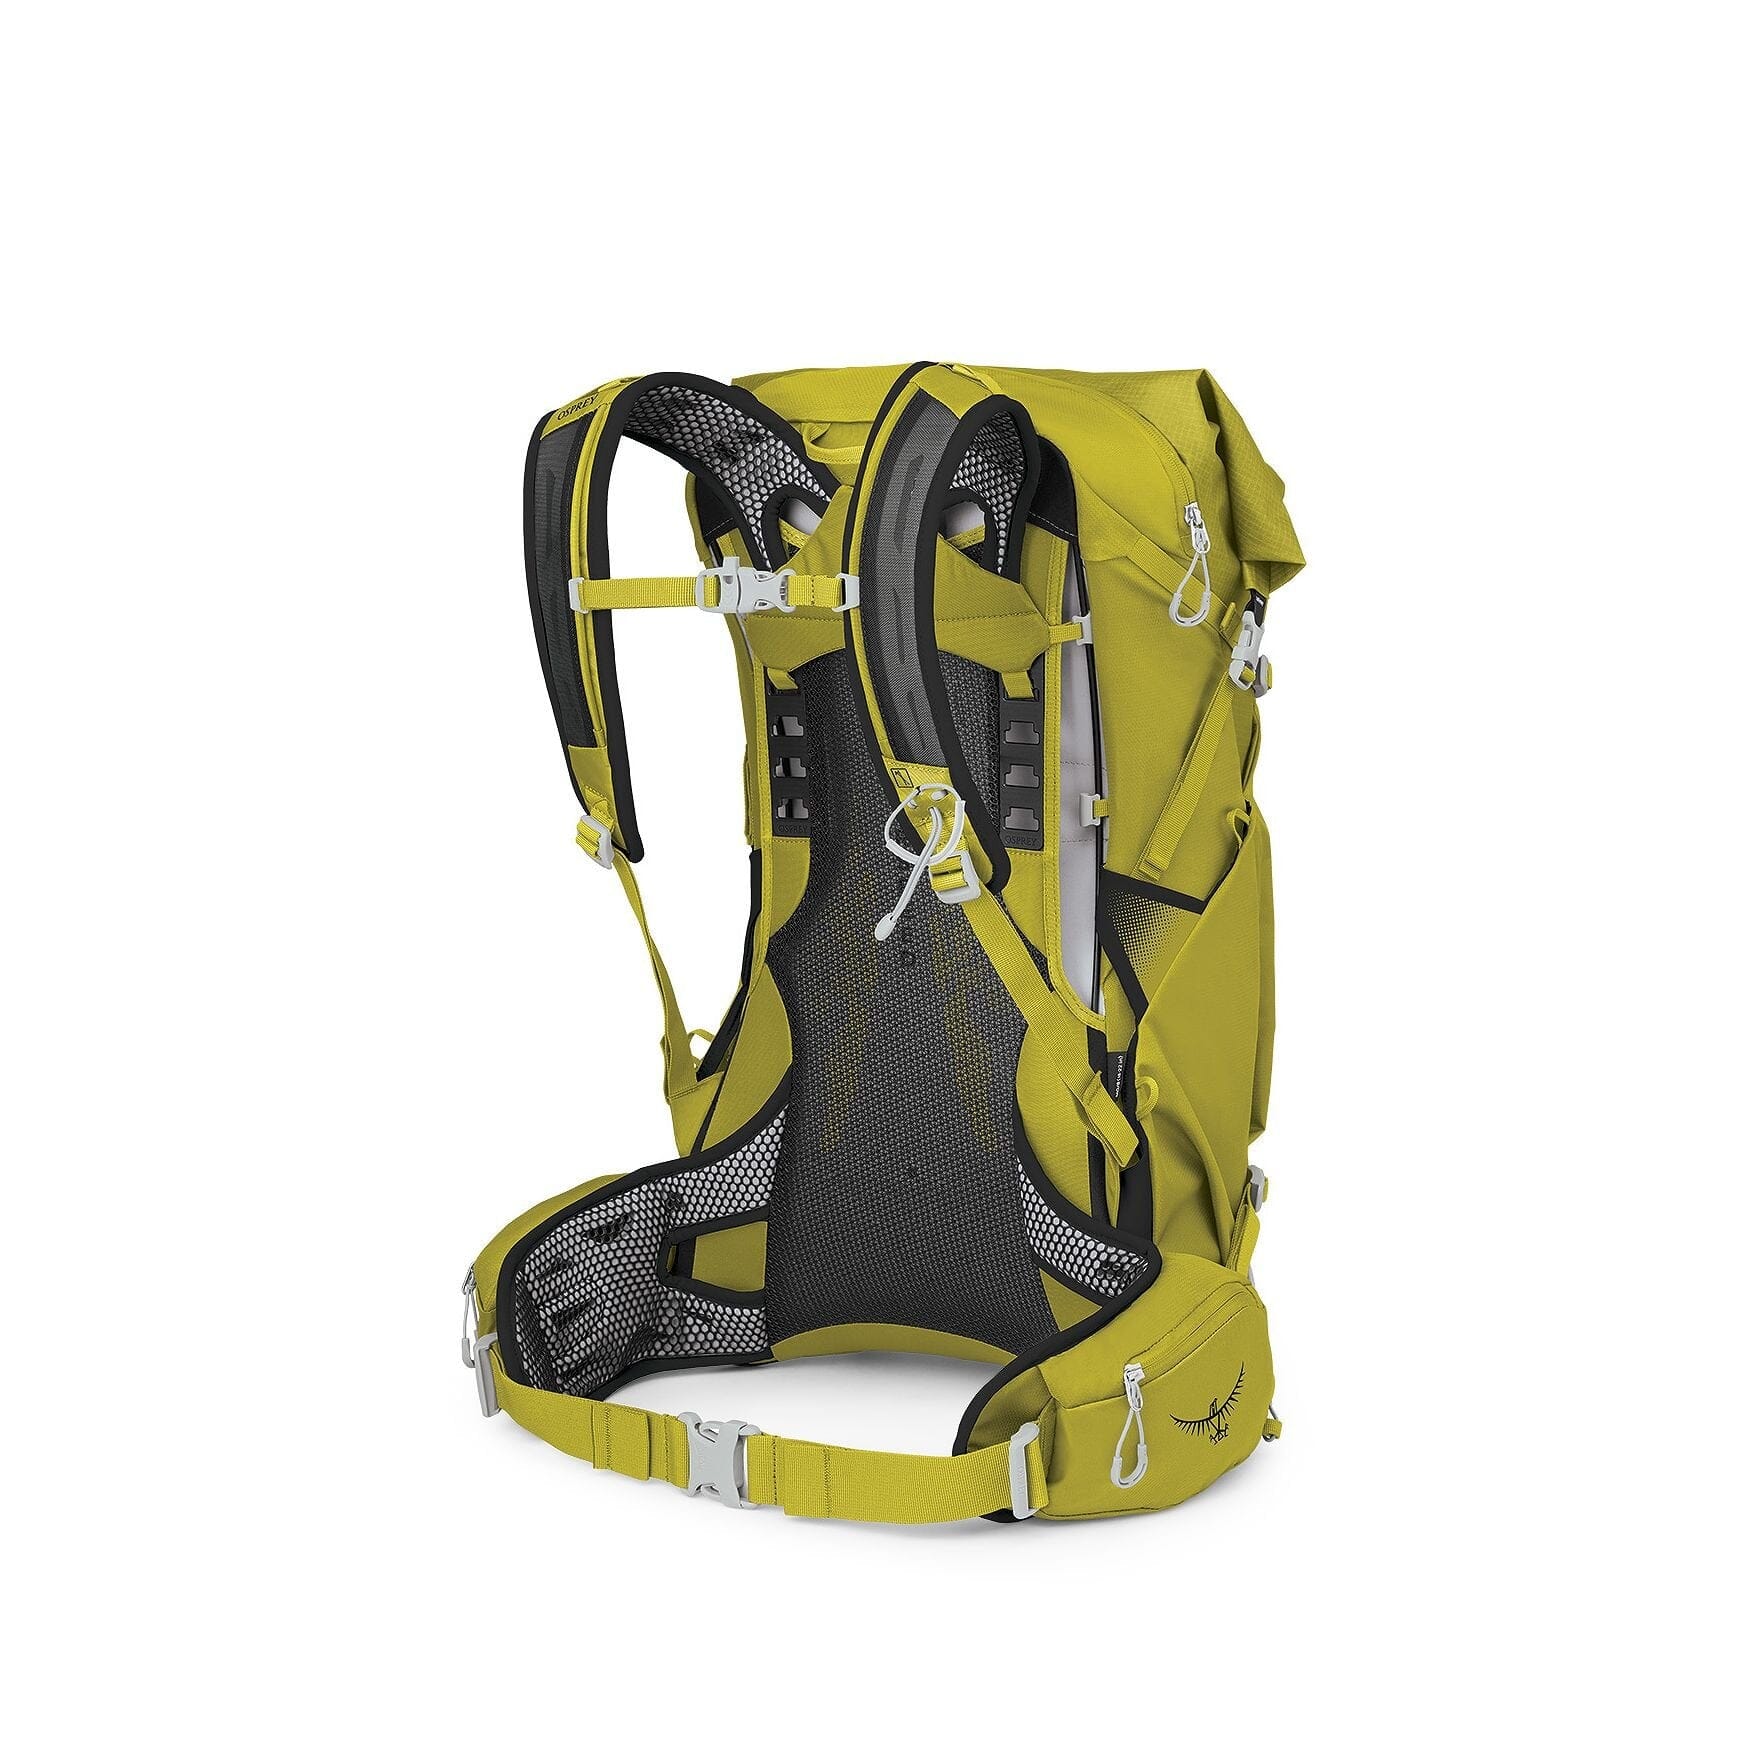 Osprey Downburst Mens 36 Waterproof Hiking Backpack Babylonica Yellow 